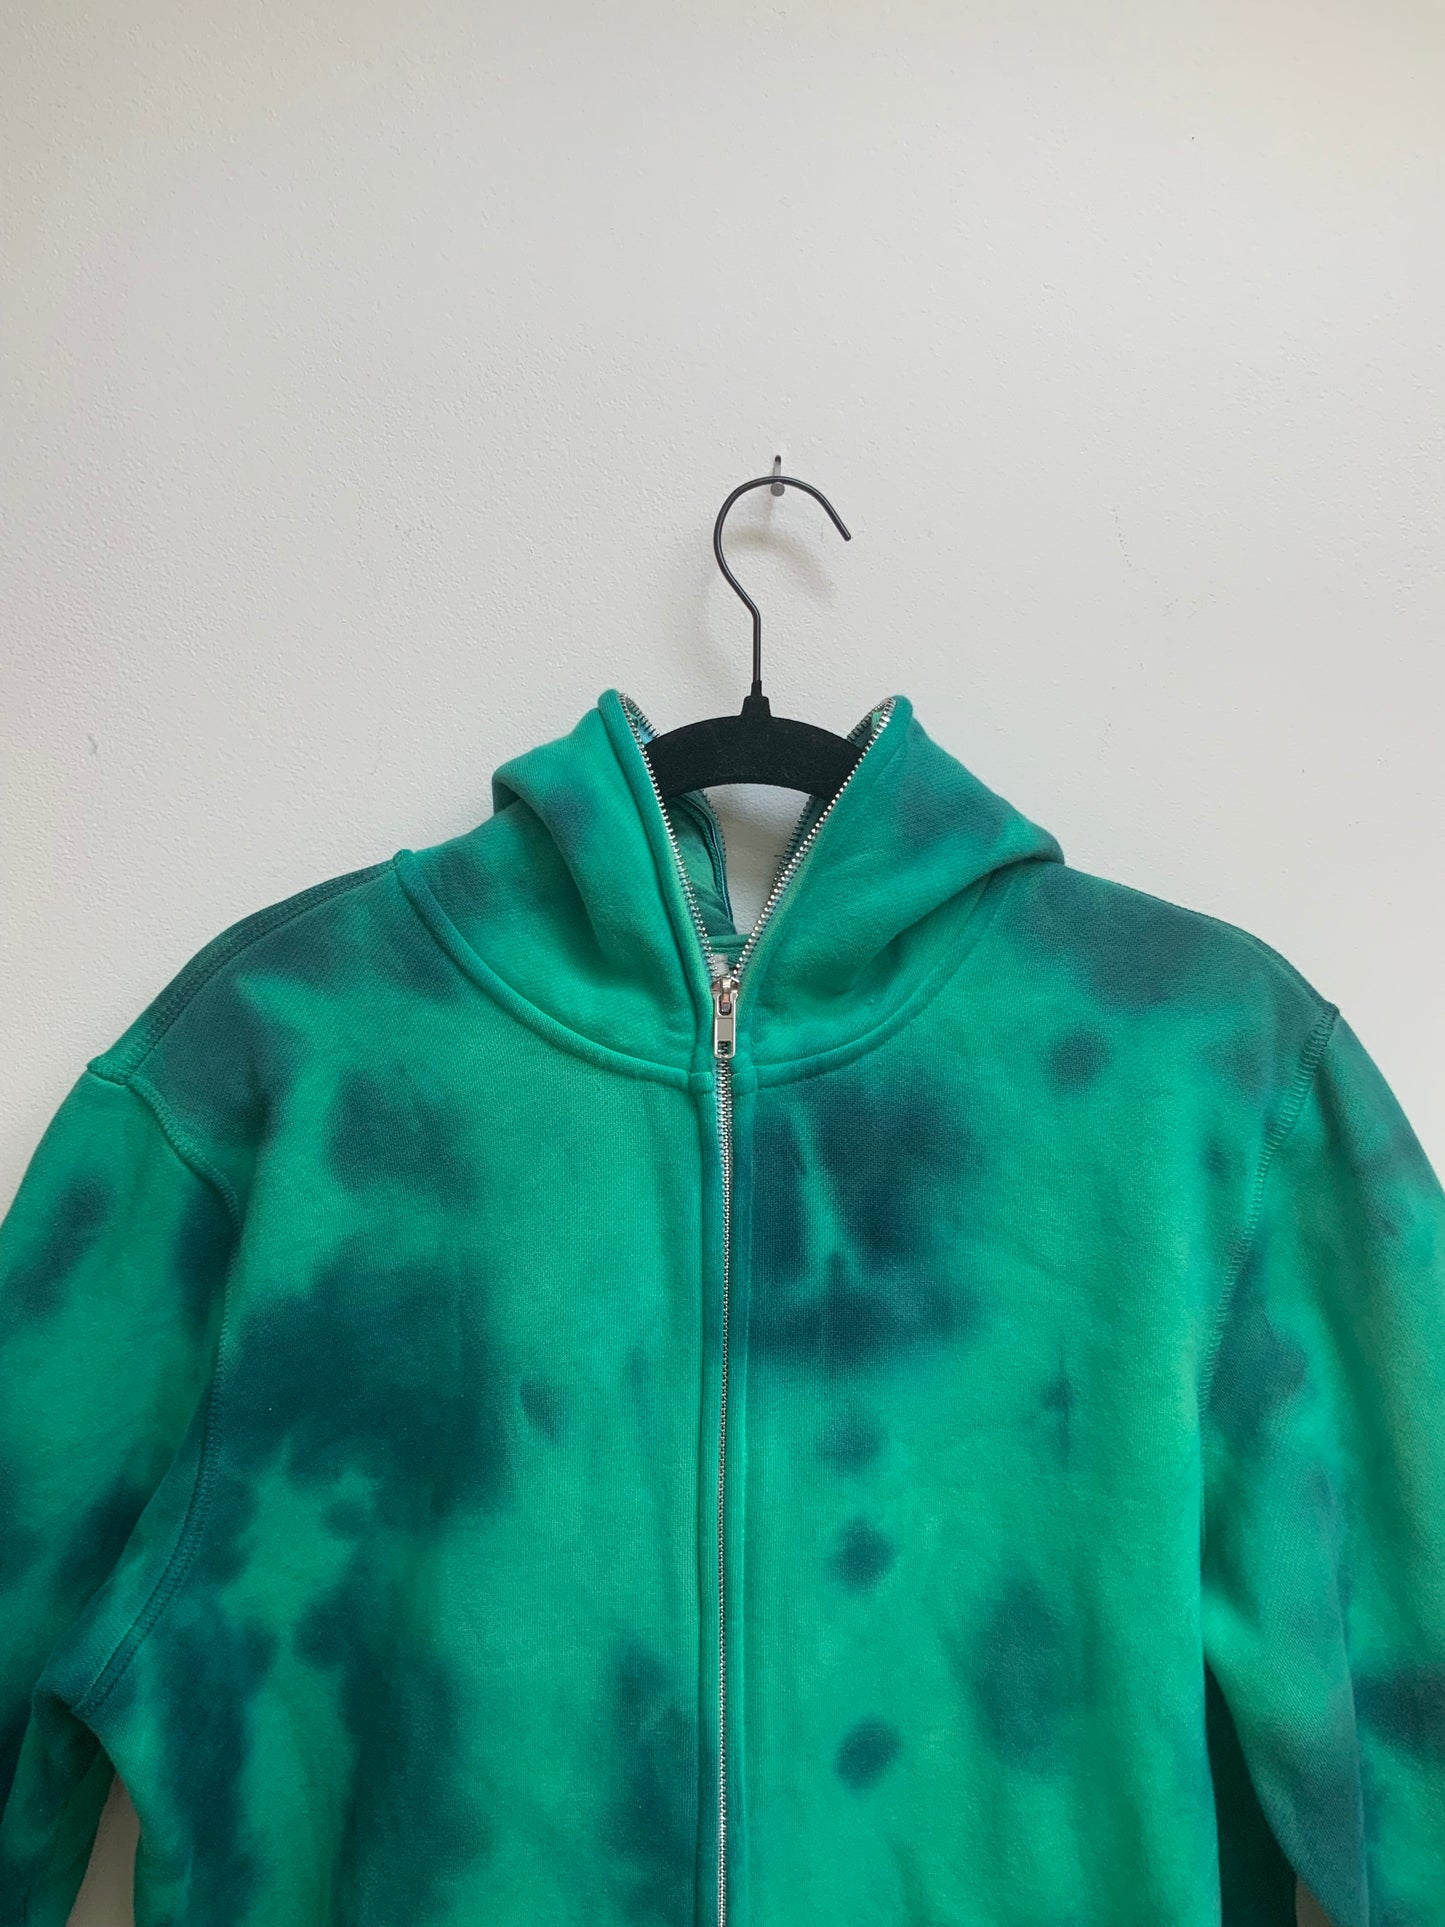 Alien green full zip hoodie